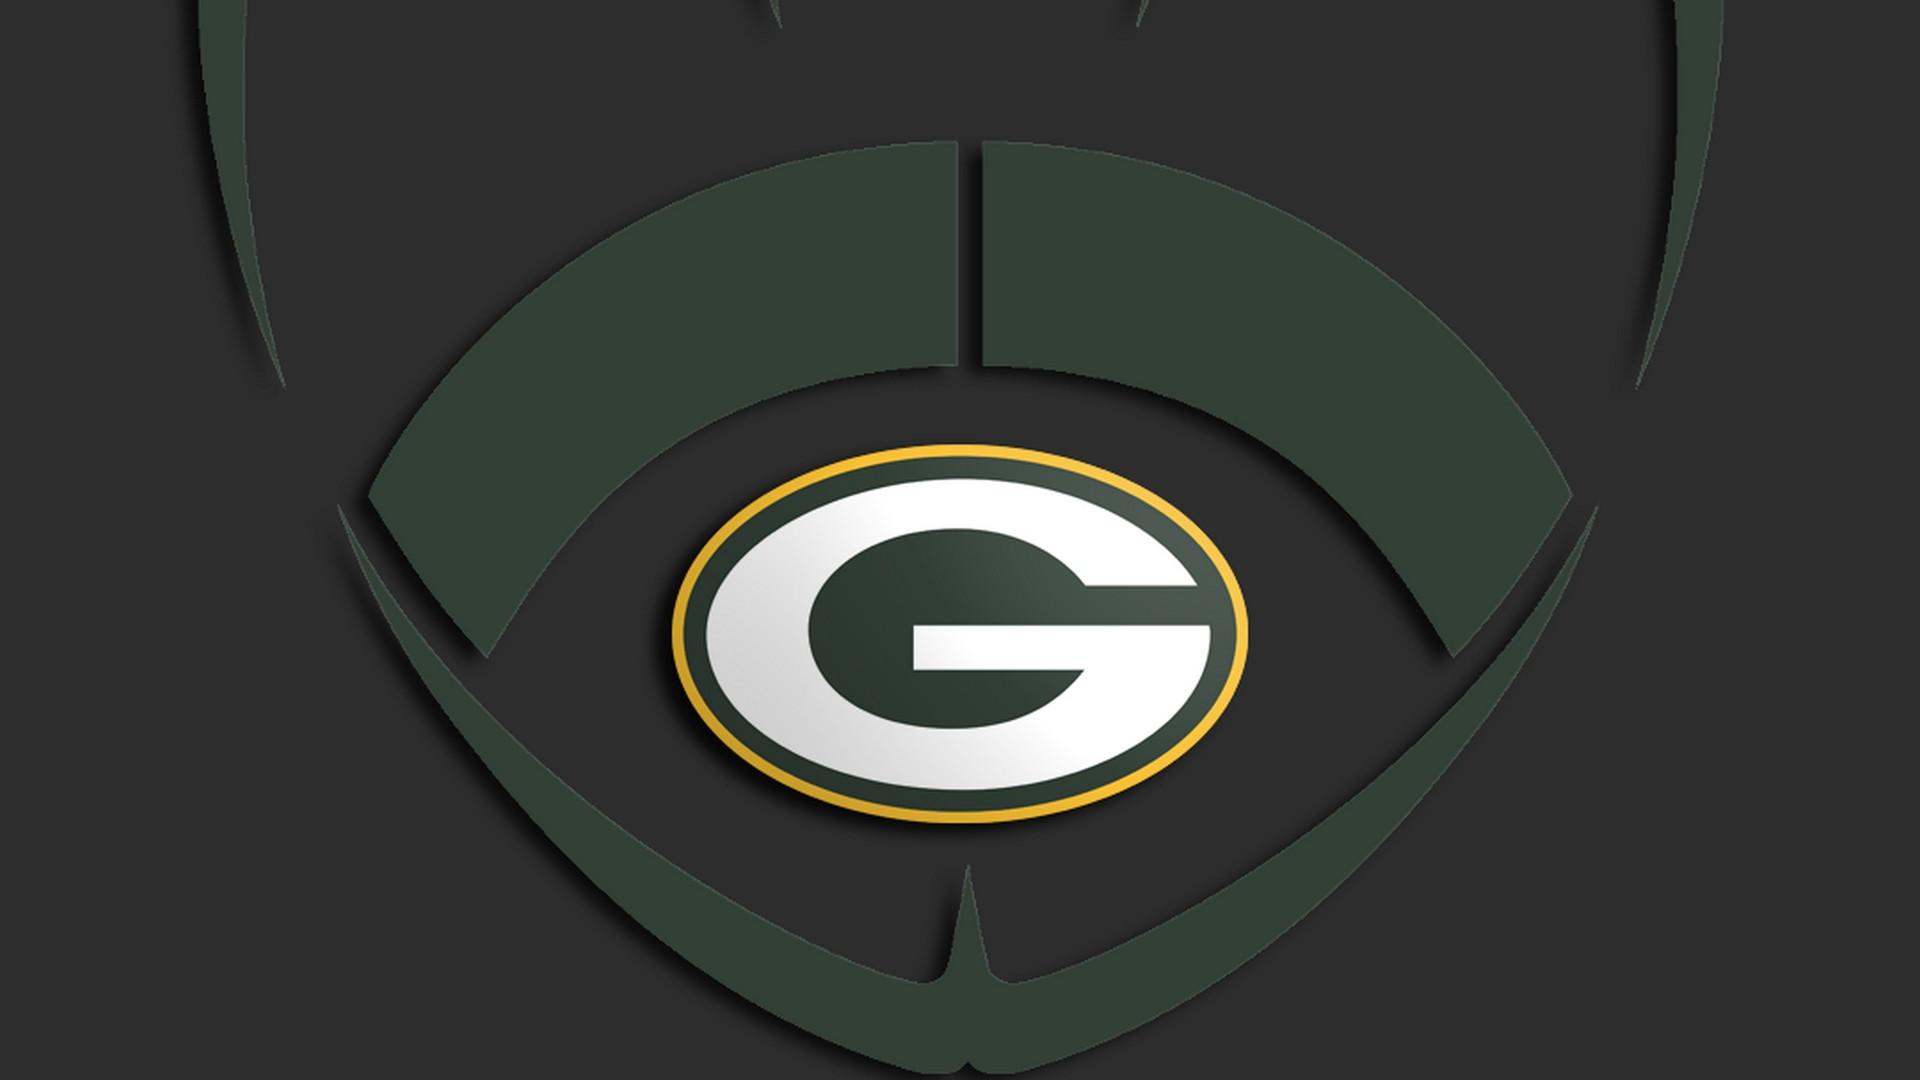 HD Green Bay Packers NFL Wallpaper NFL Football Wallpaper